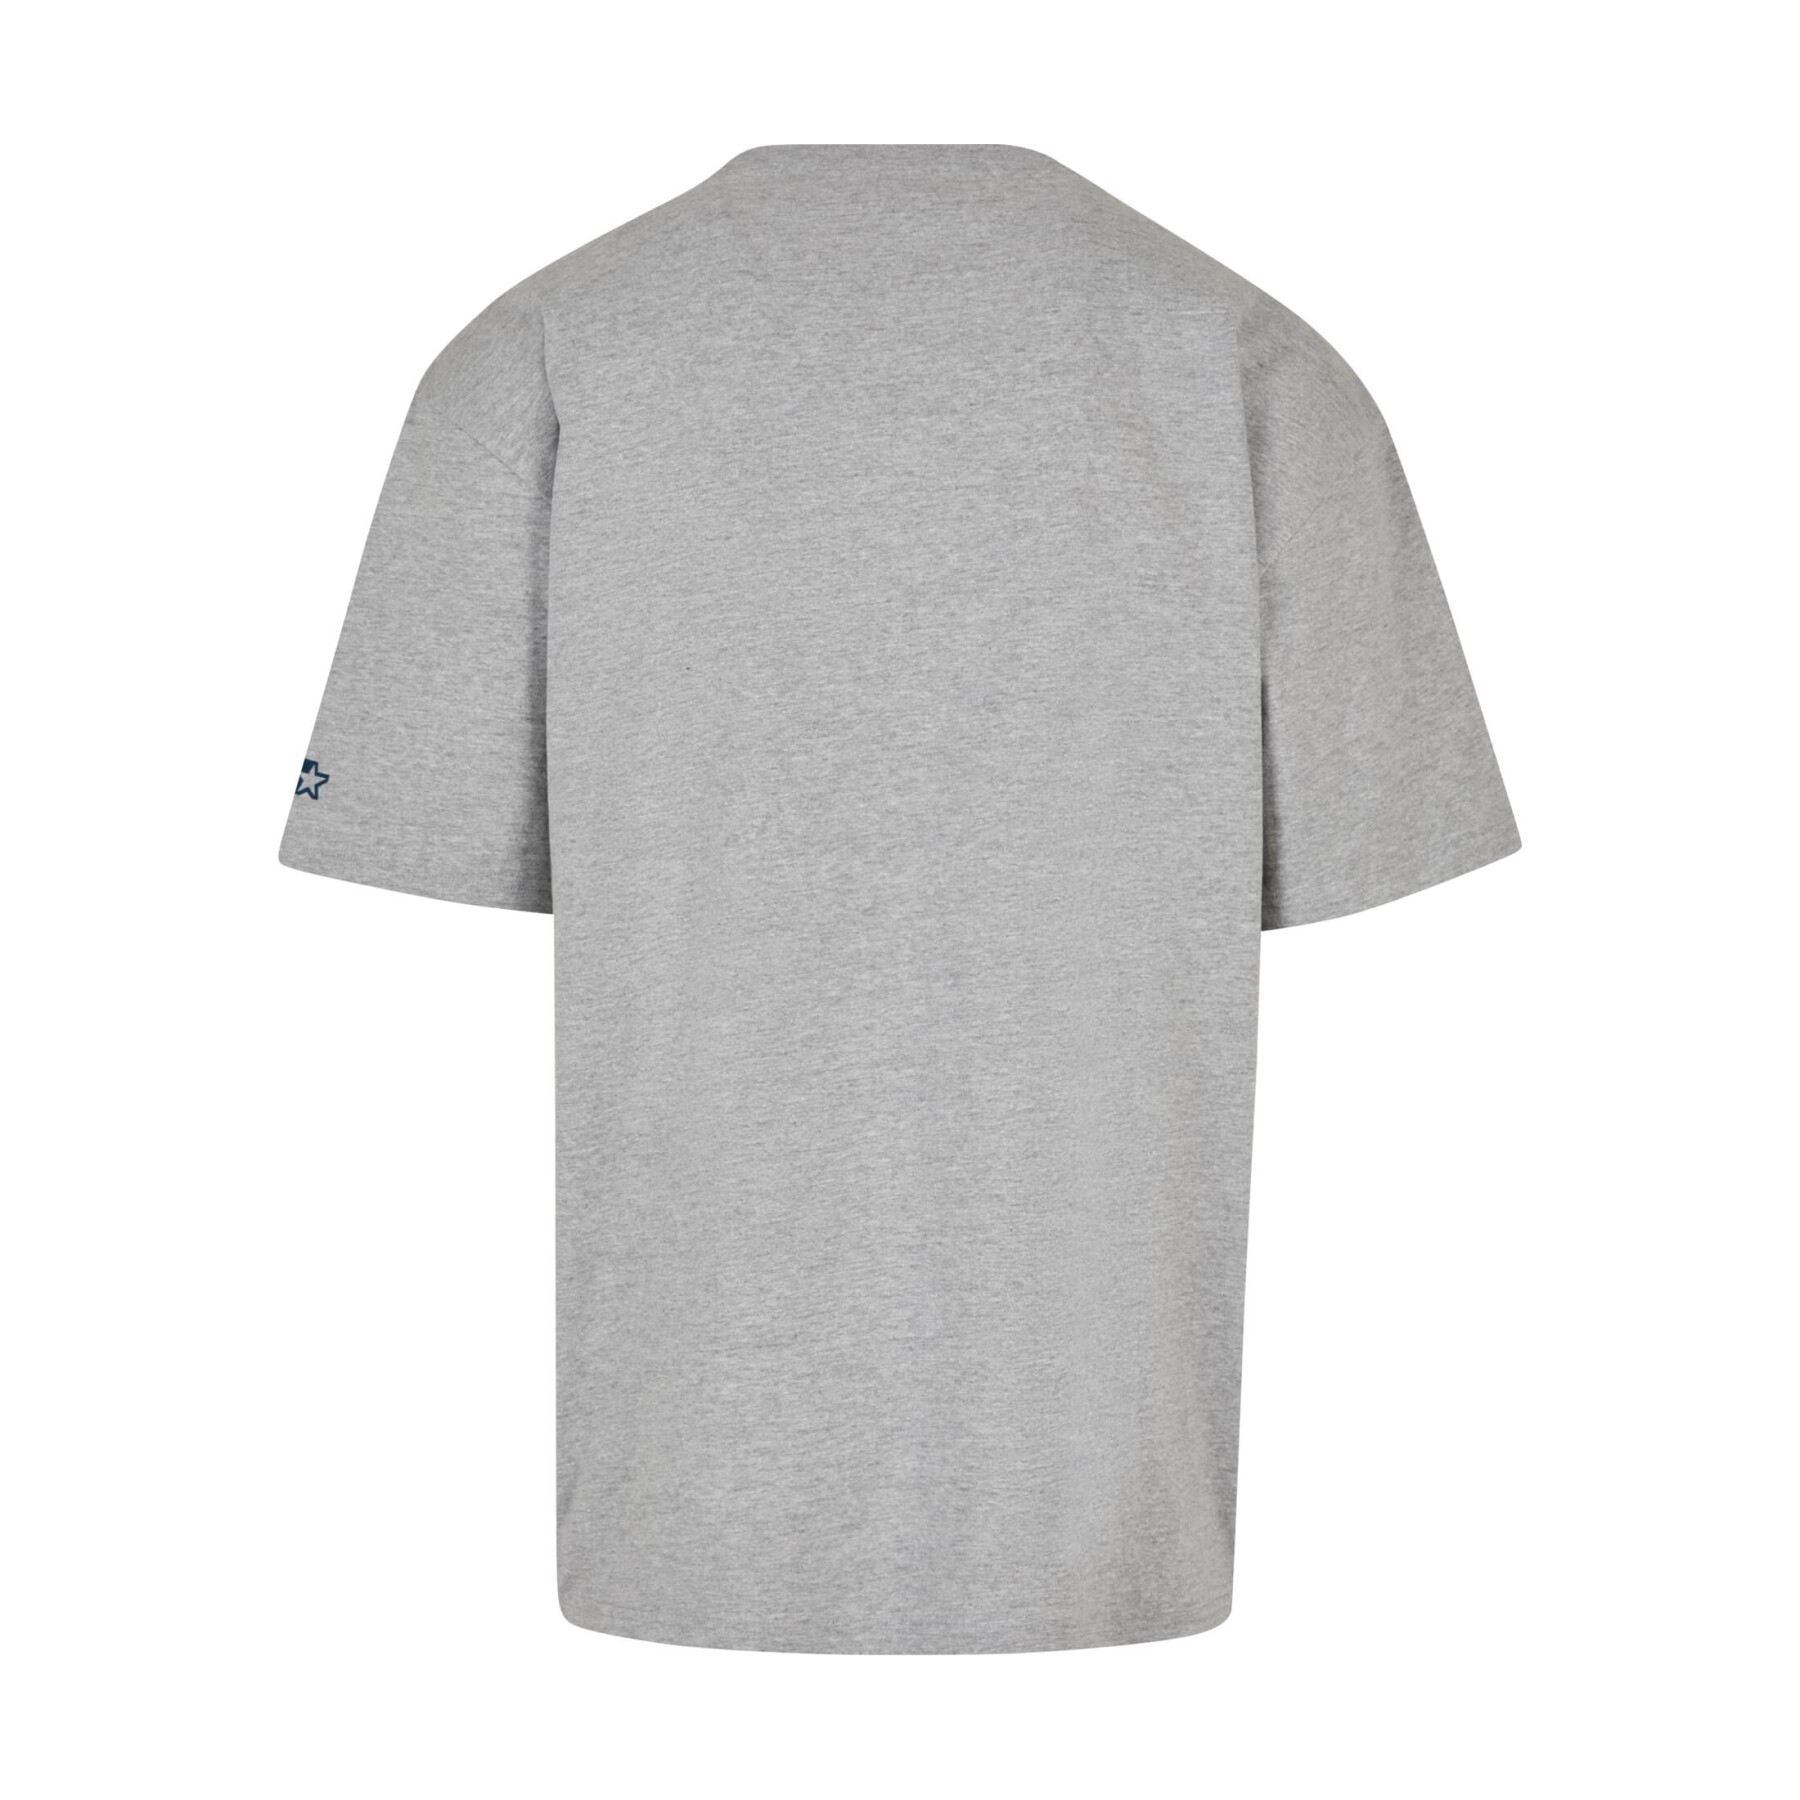 Camiseta oversize Starter Black Label